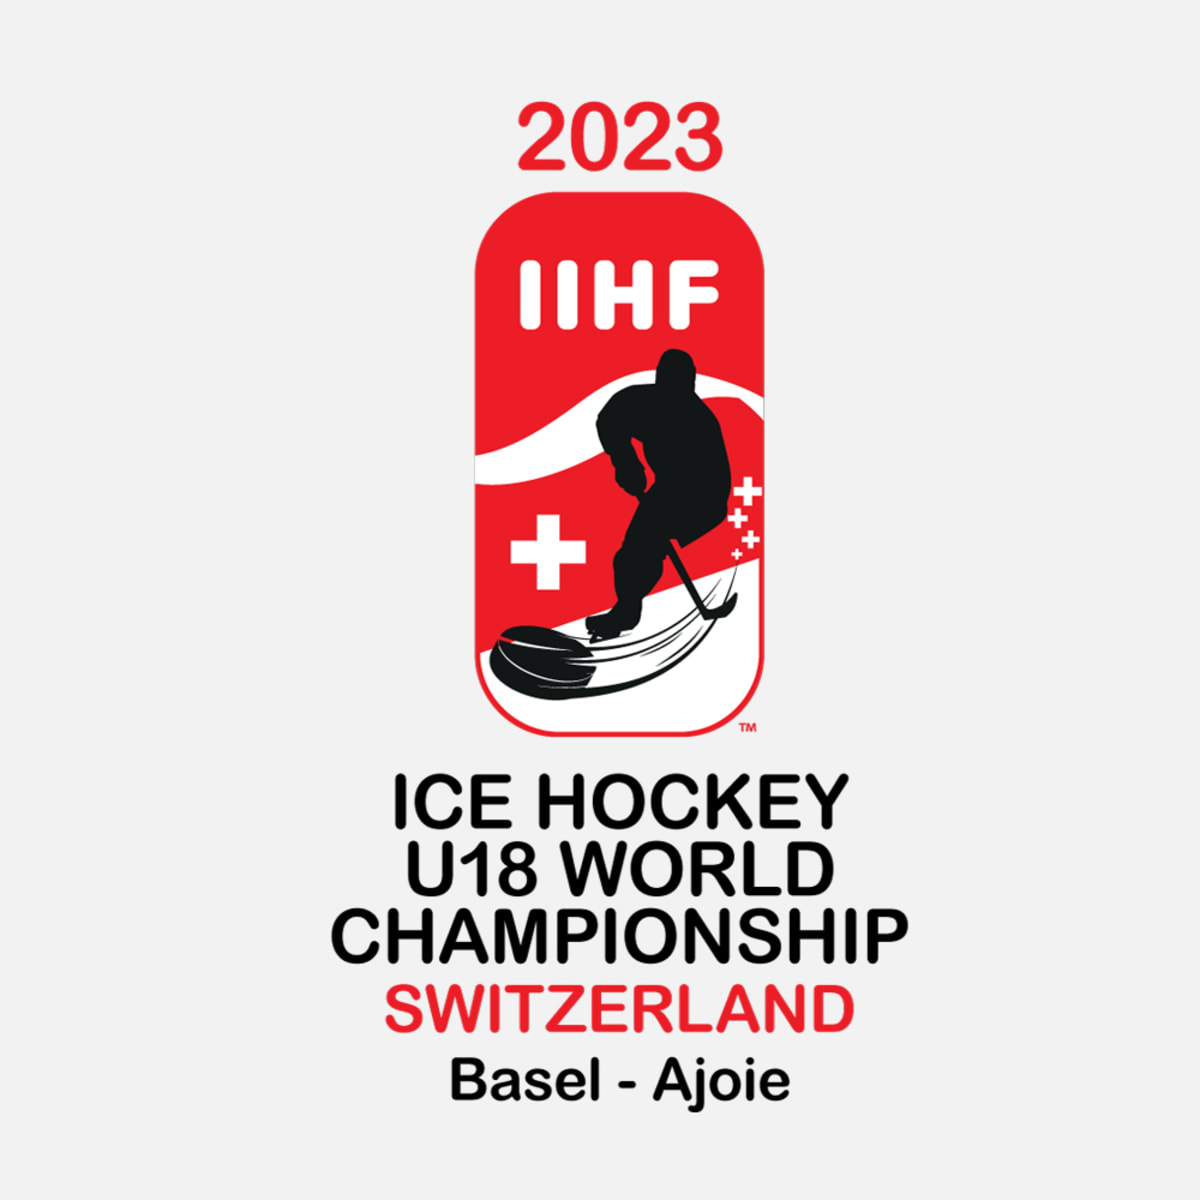 Canada names 2023 U-18 World Championship roster: 2023, 2024 NHL